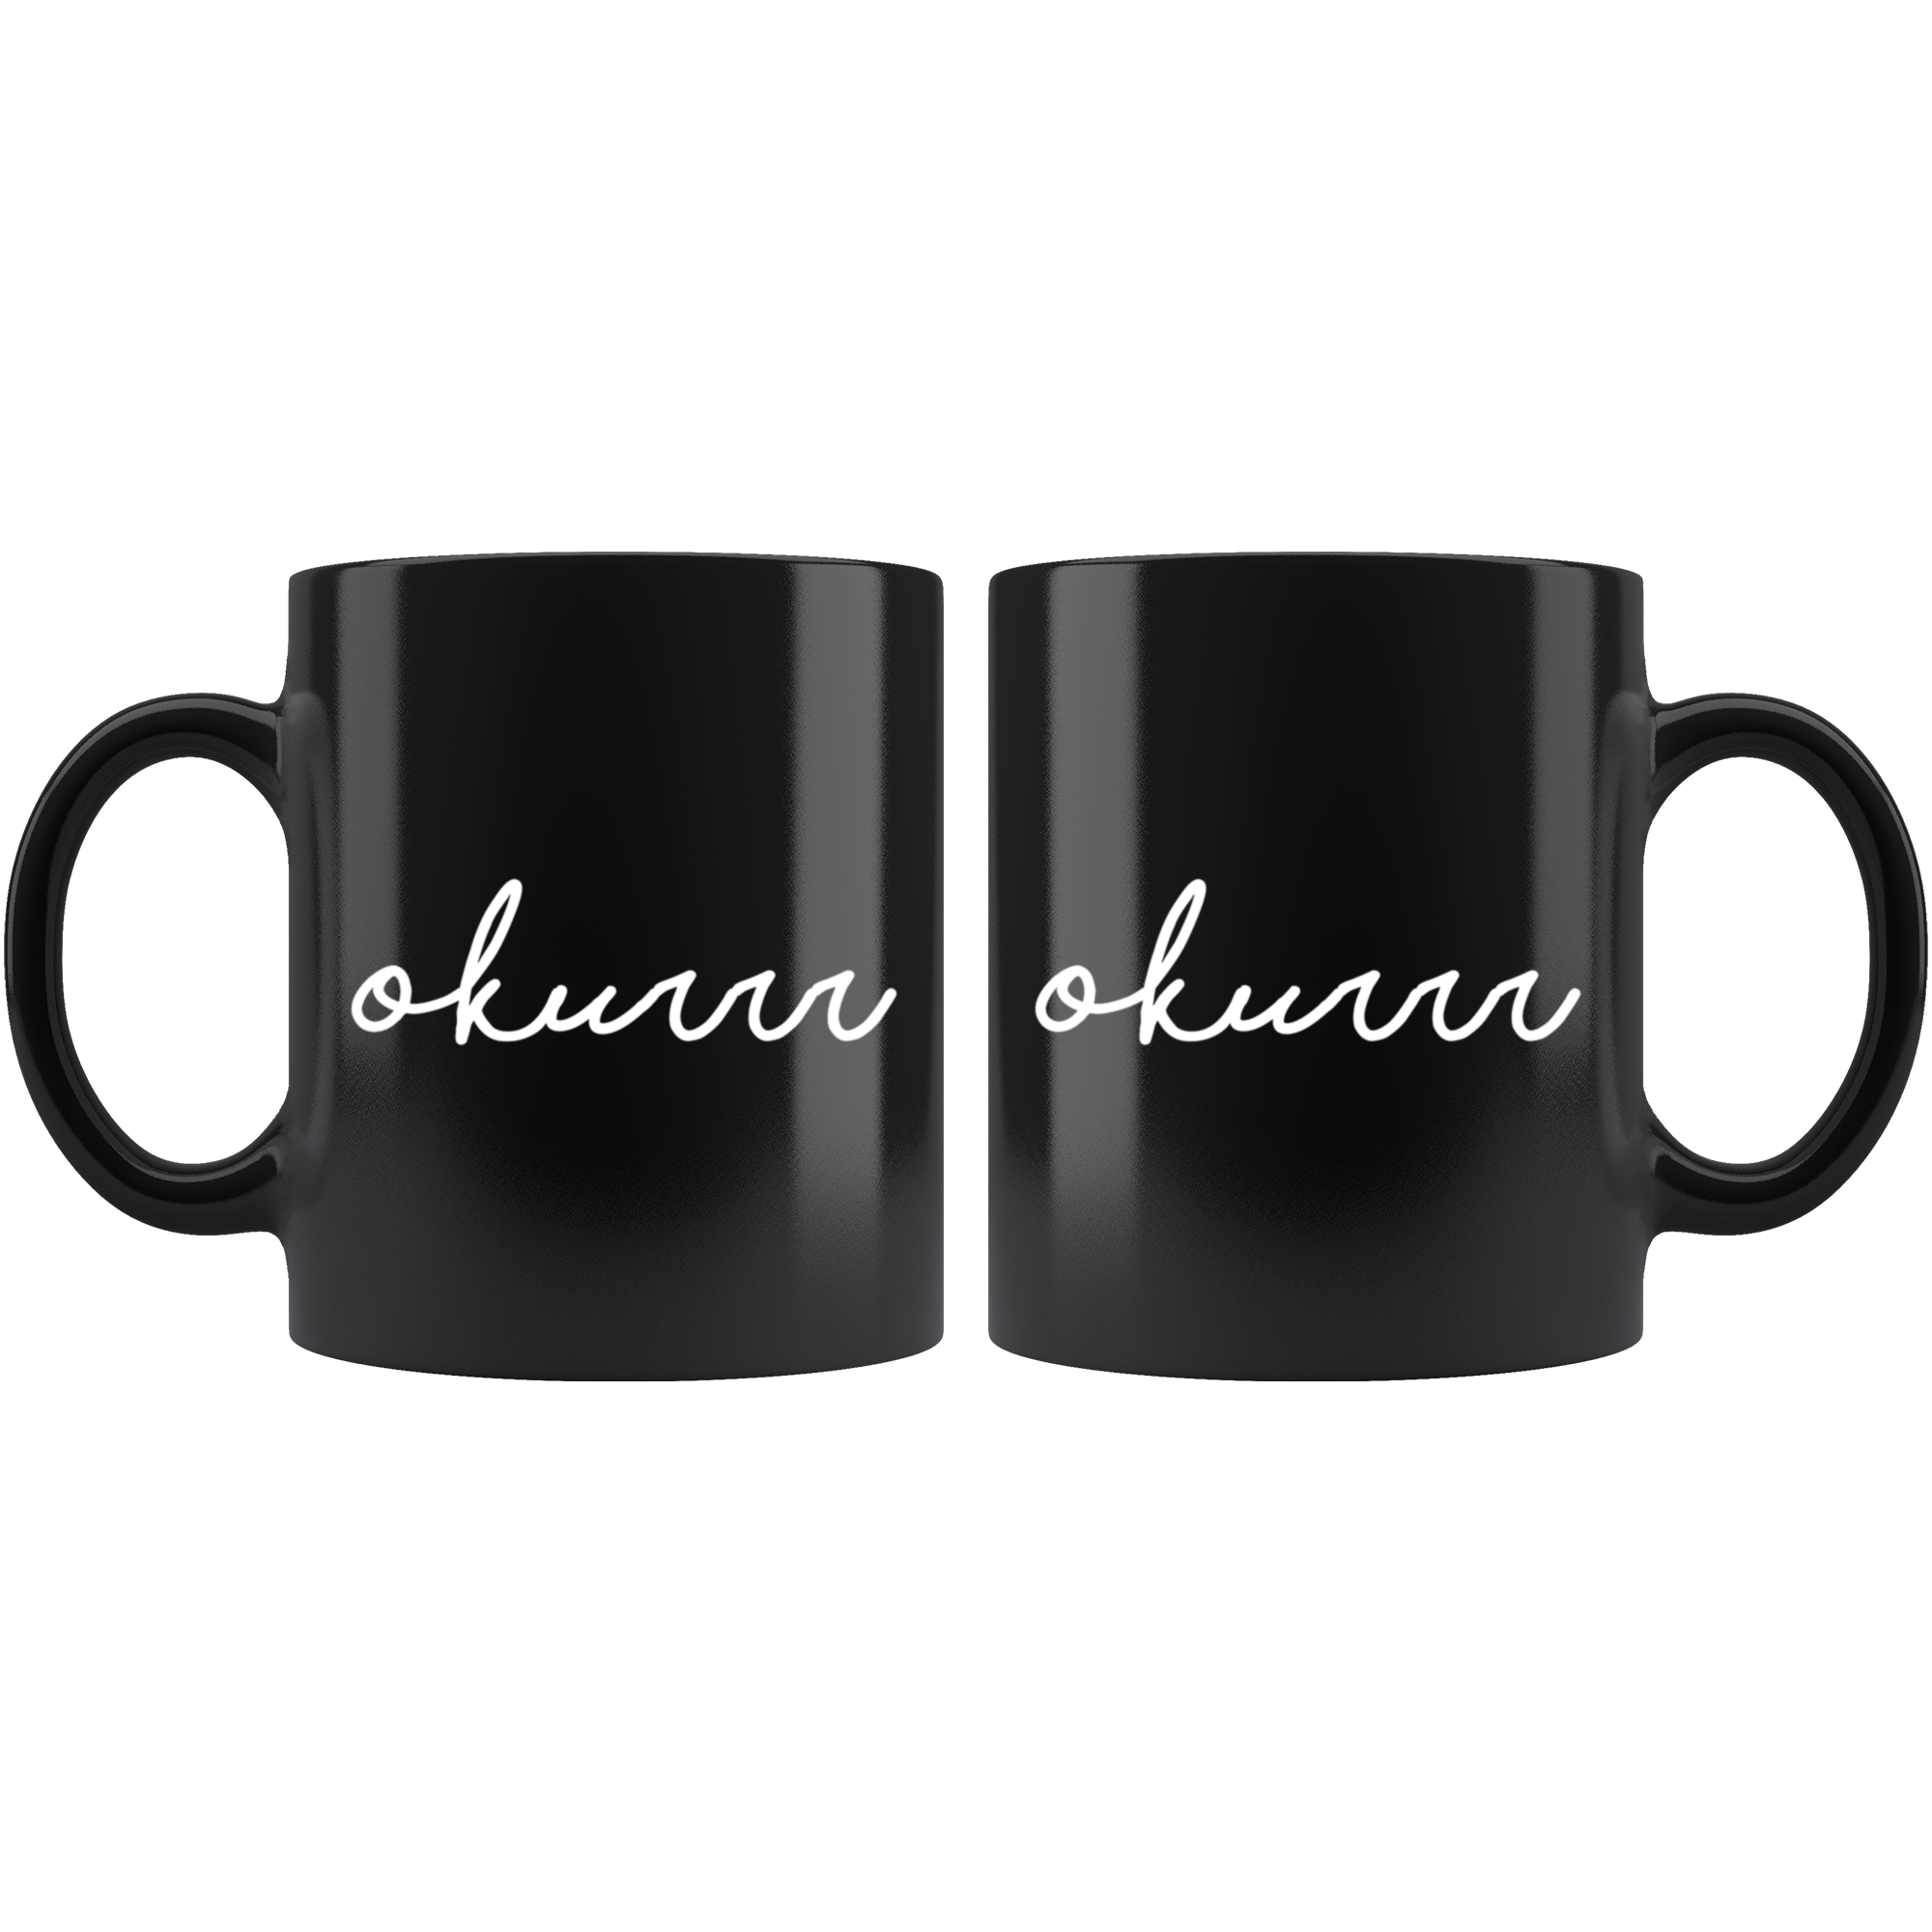 Okurrr - Black Mug - Guestbookery